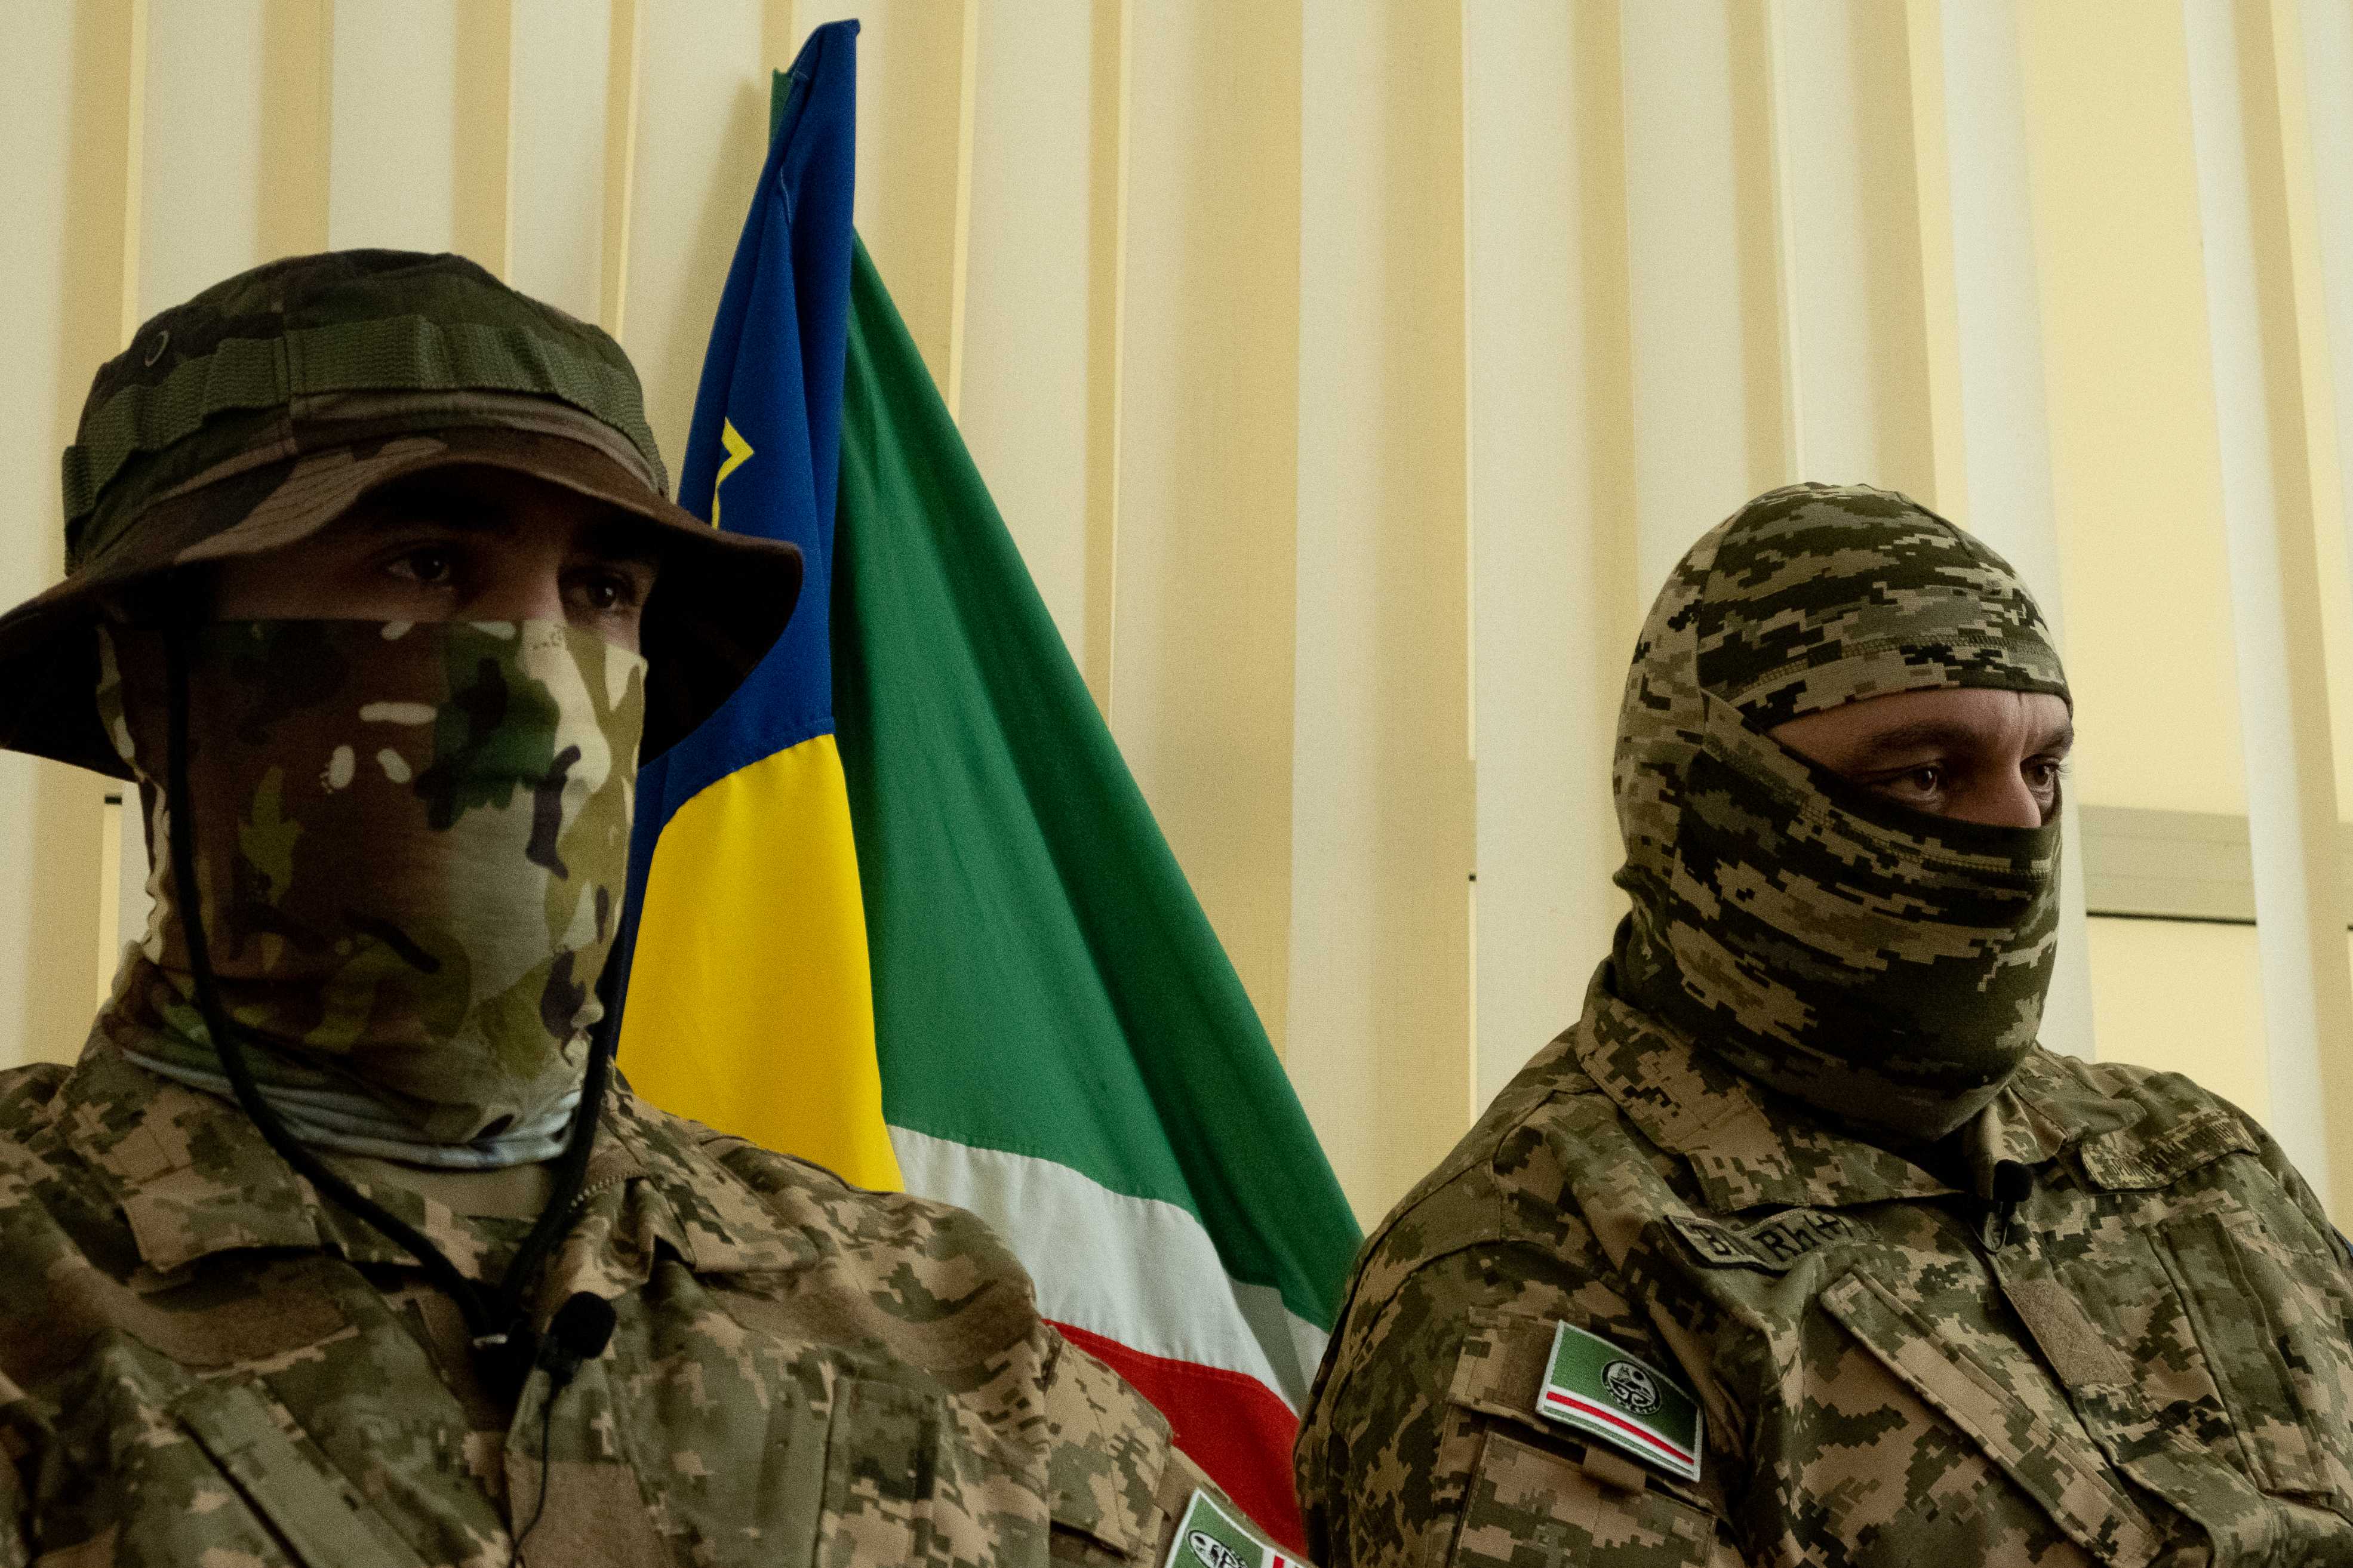 Meet the Chechens fighting Russia in Ukraine